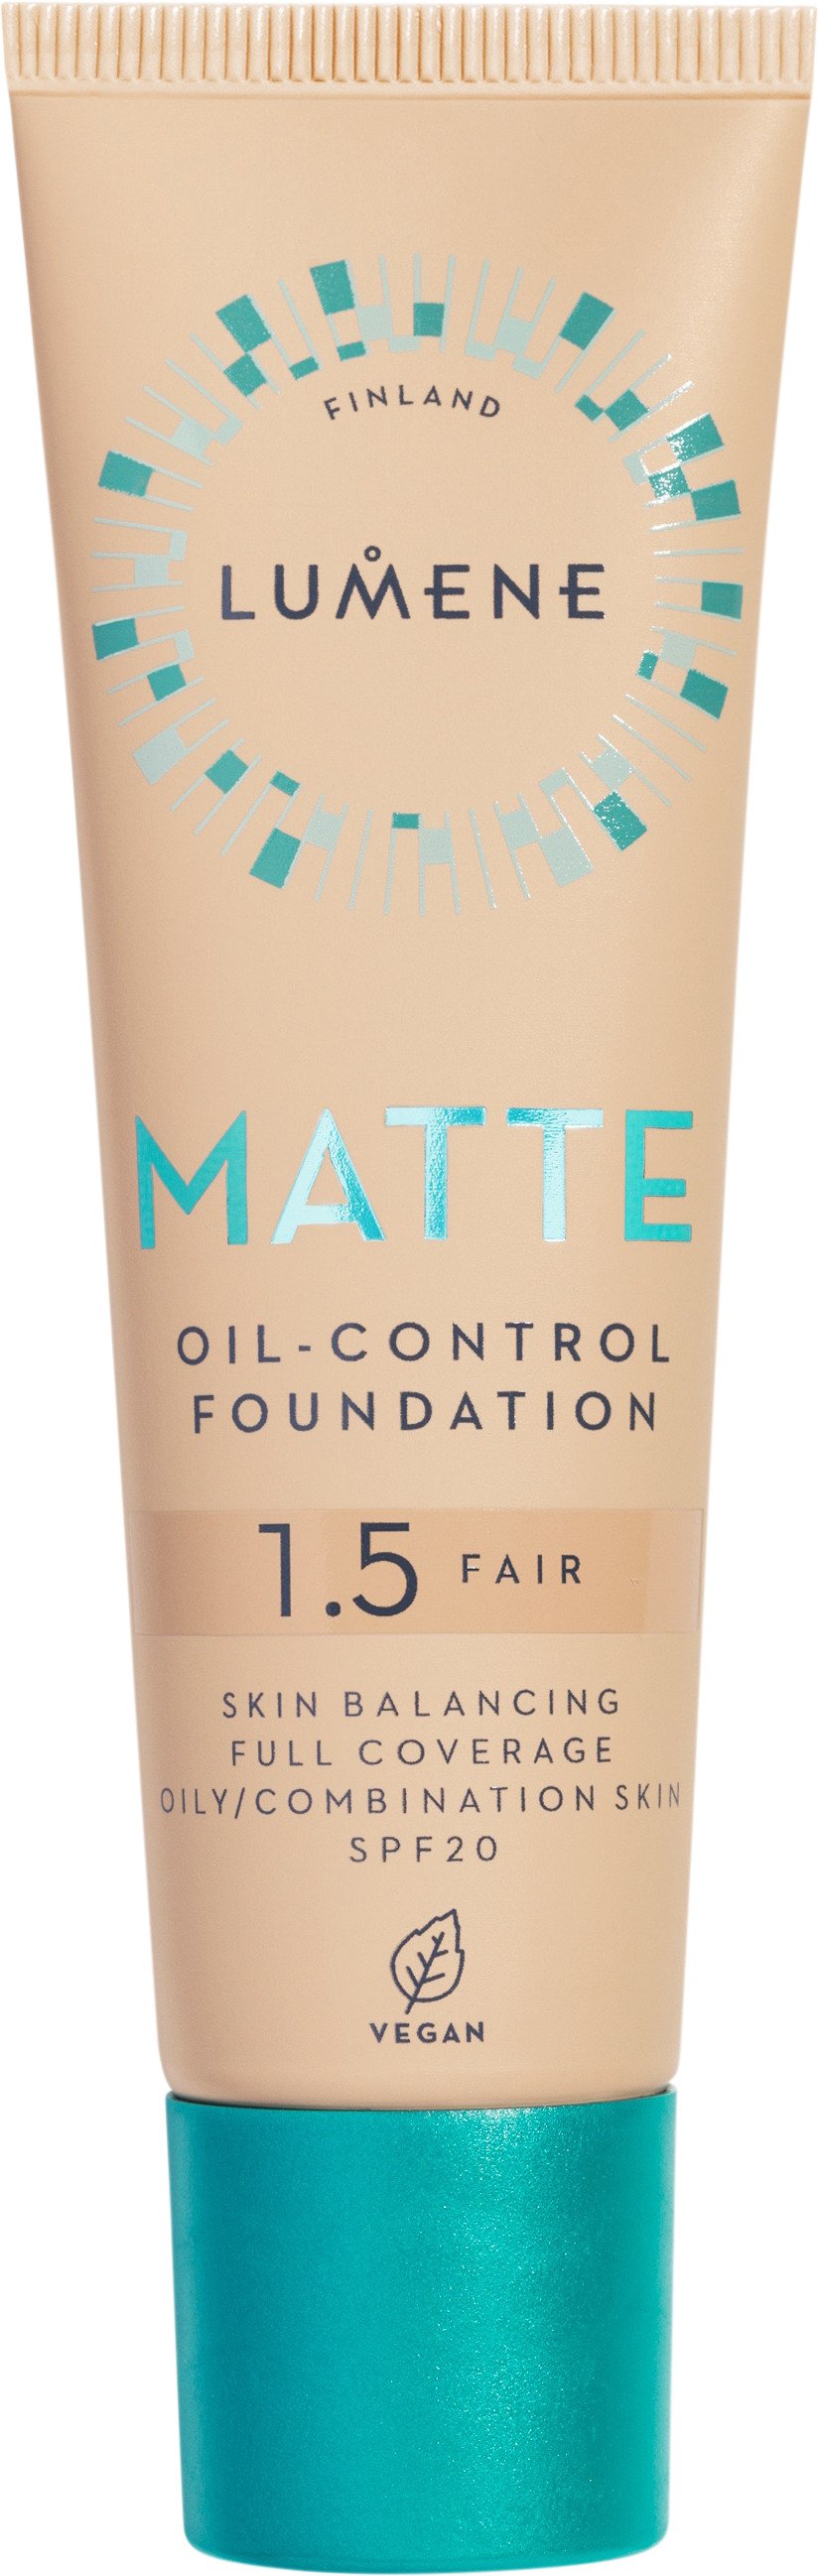 Lumene Matte Oil-Control Foundation SPF20 1.5 Fair 30 ml